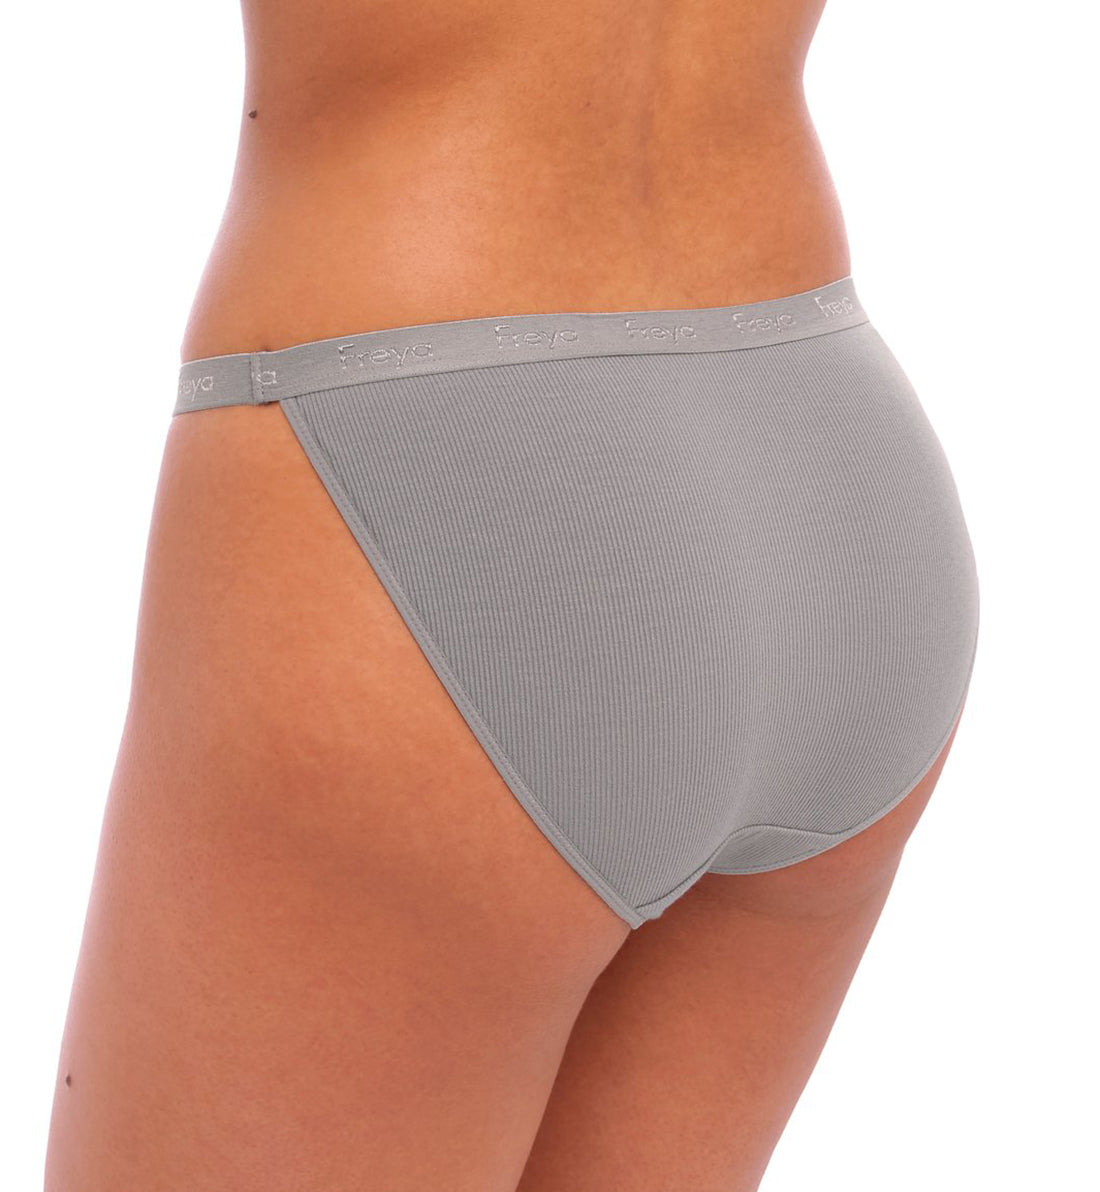 Freya Chill String Bikini Brief (401367),XS,Cool Grey - Cool Grey,XS